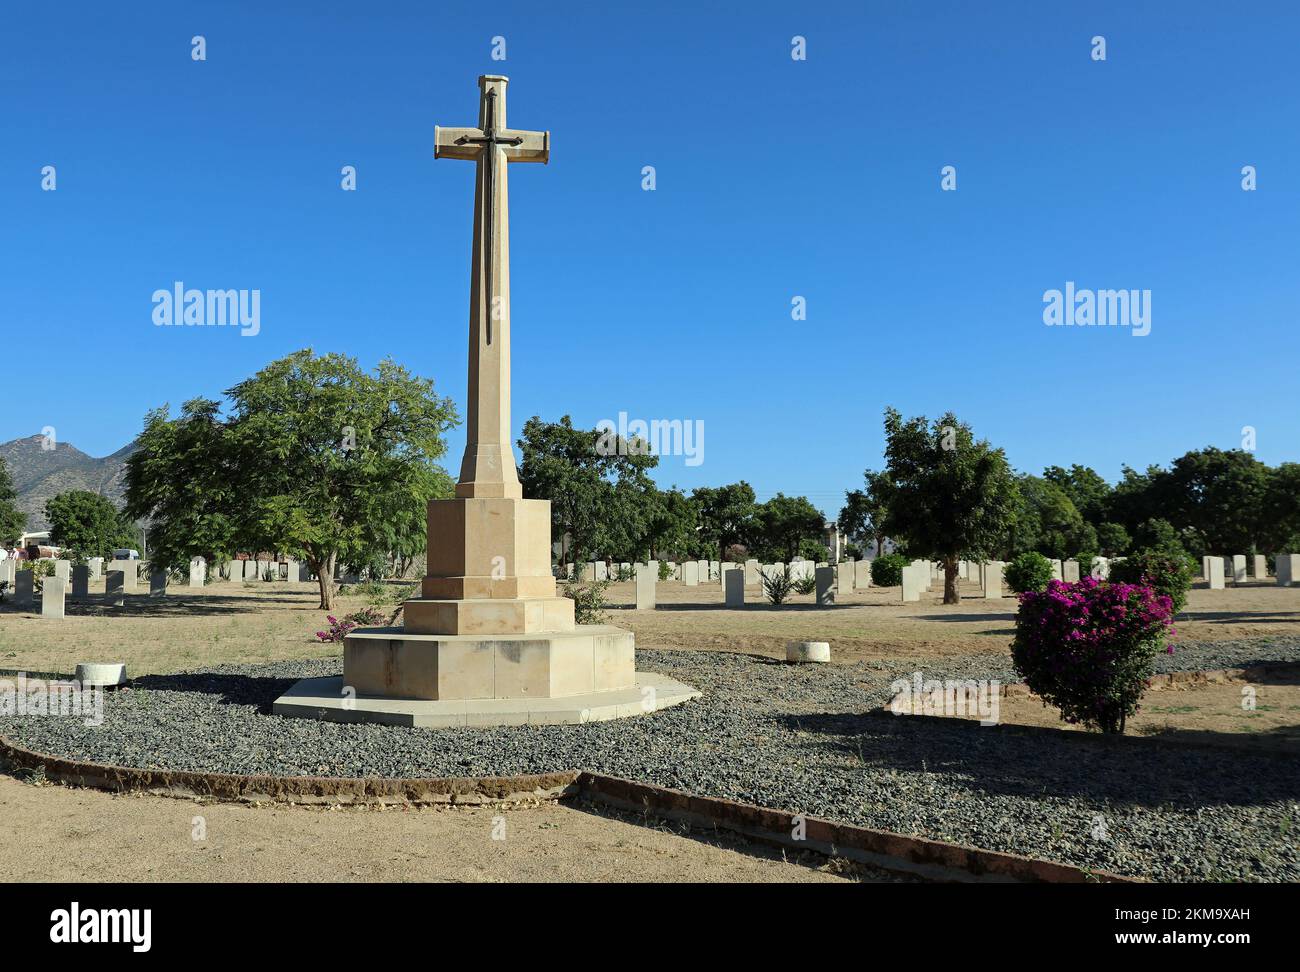 Keren War Cemetery in Eritrea Stock Photo